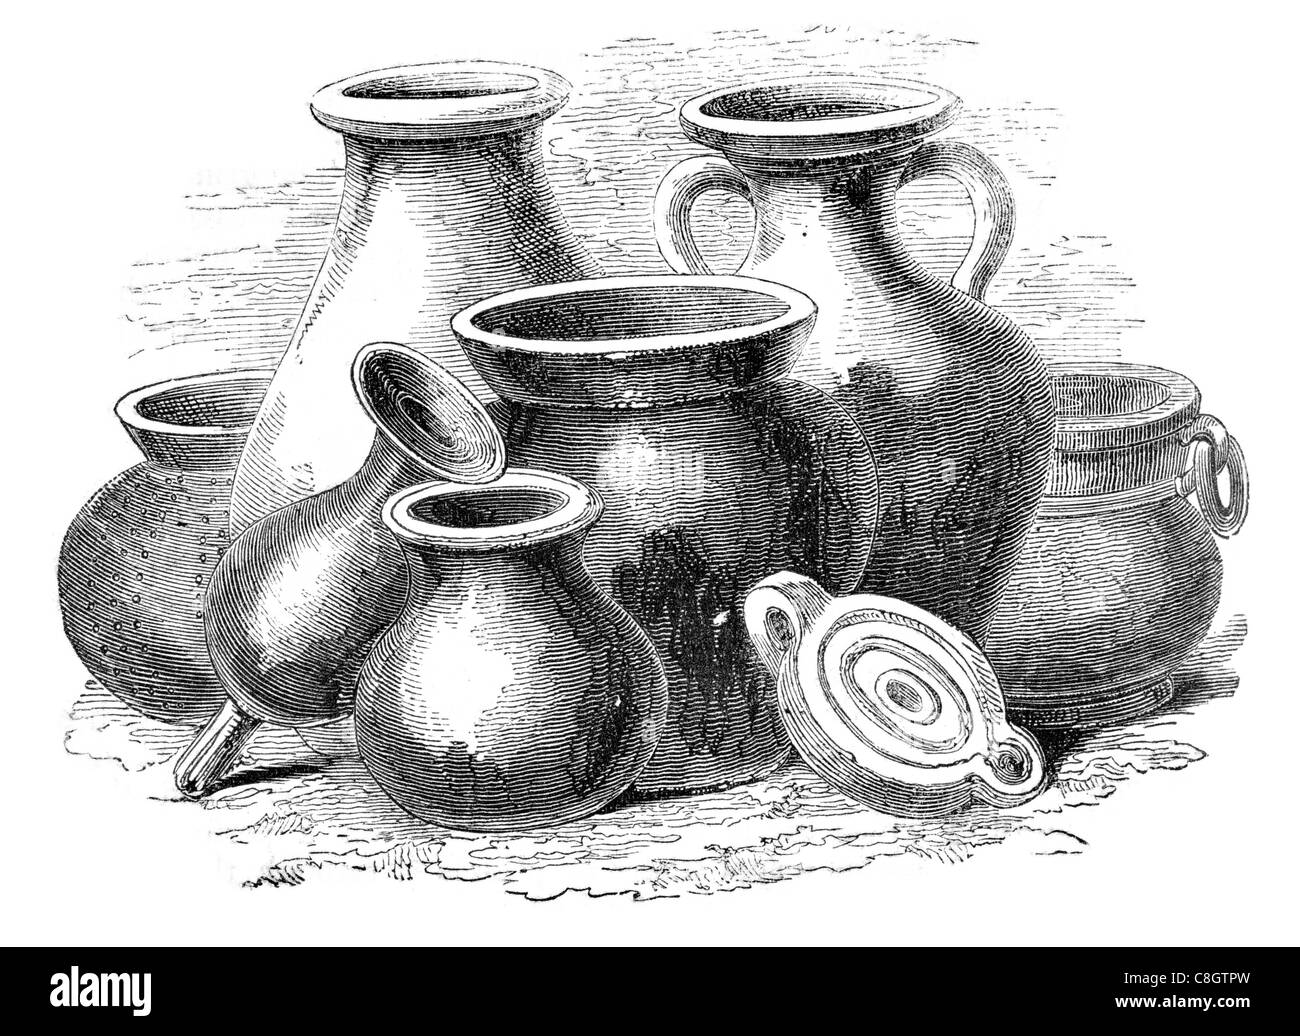 Römische britische irdenen Gefäße Steingut Keramik-Keramik-Geschirr dekorative Kugel Ton Kaolin Quarz Feldspat Creamware Stockfoto